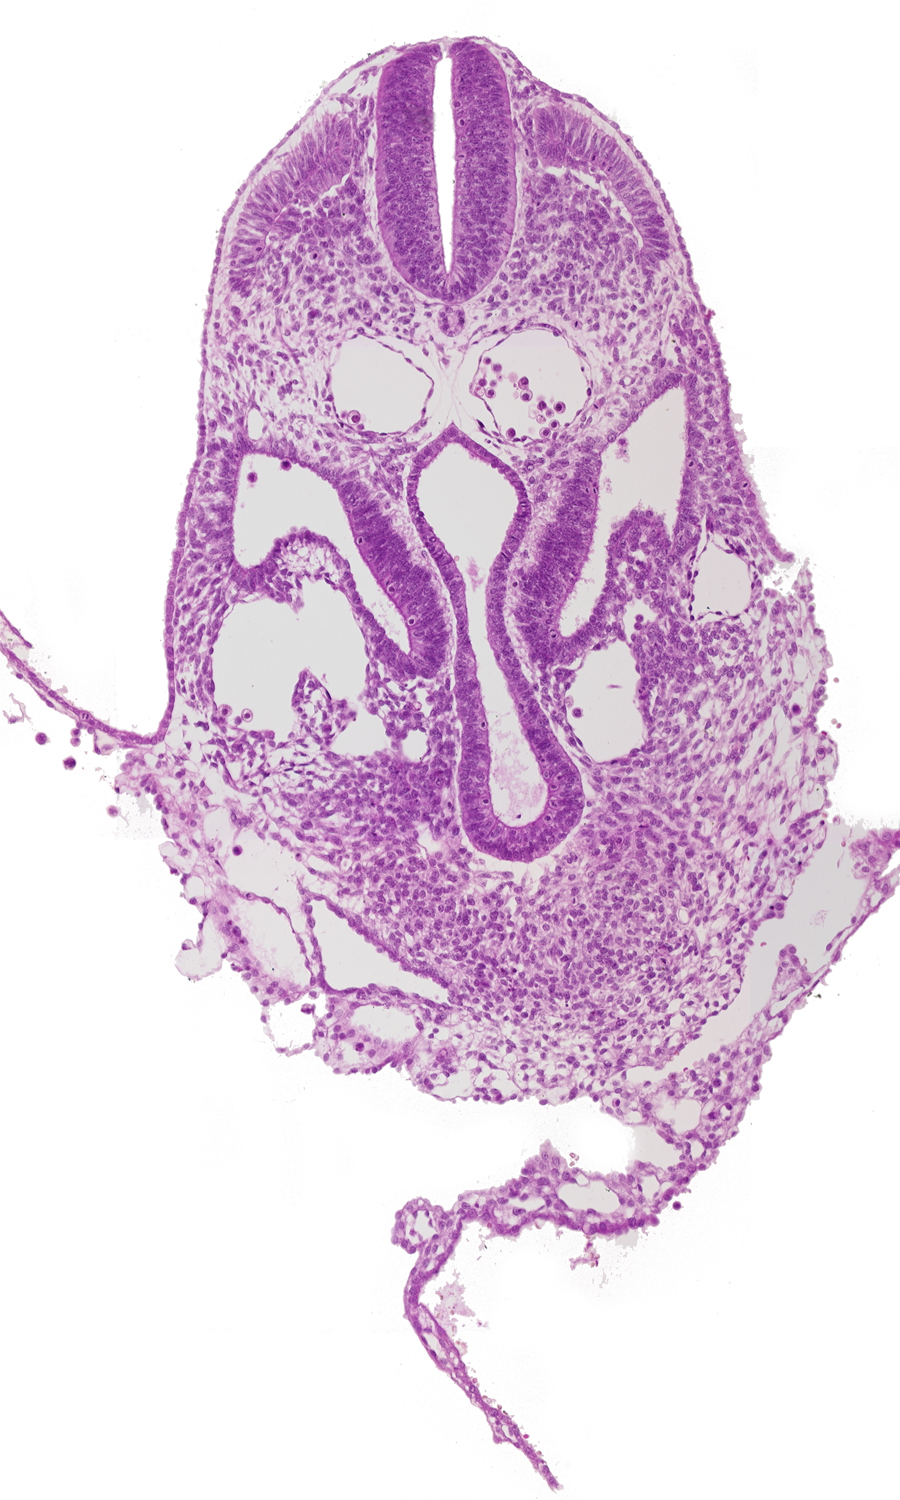 amnion, amniotic cavity, caudal part of pericardial cavity, dermatomyotome 6 (C-2), hemopoietic tissue, hepatic venous plexus, left umbilical vein, left vitelline (omphalomesenteric) vein, midgut, postcardinal vein, right horn of sinus venosus, sclerotome, umbilical vesicle wall